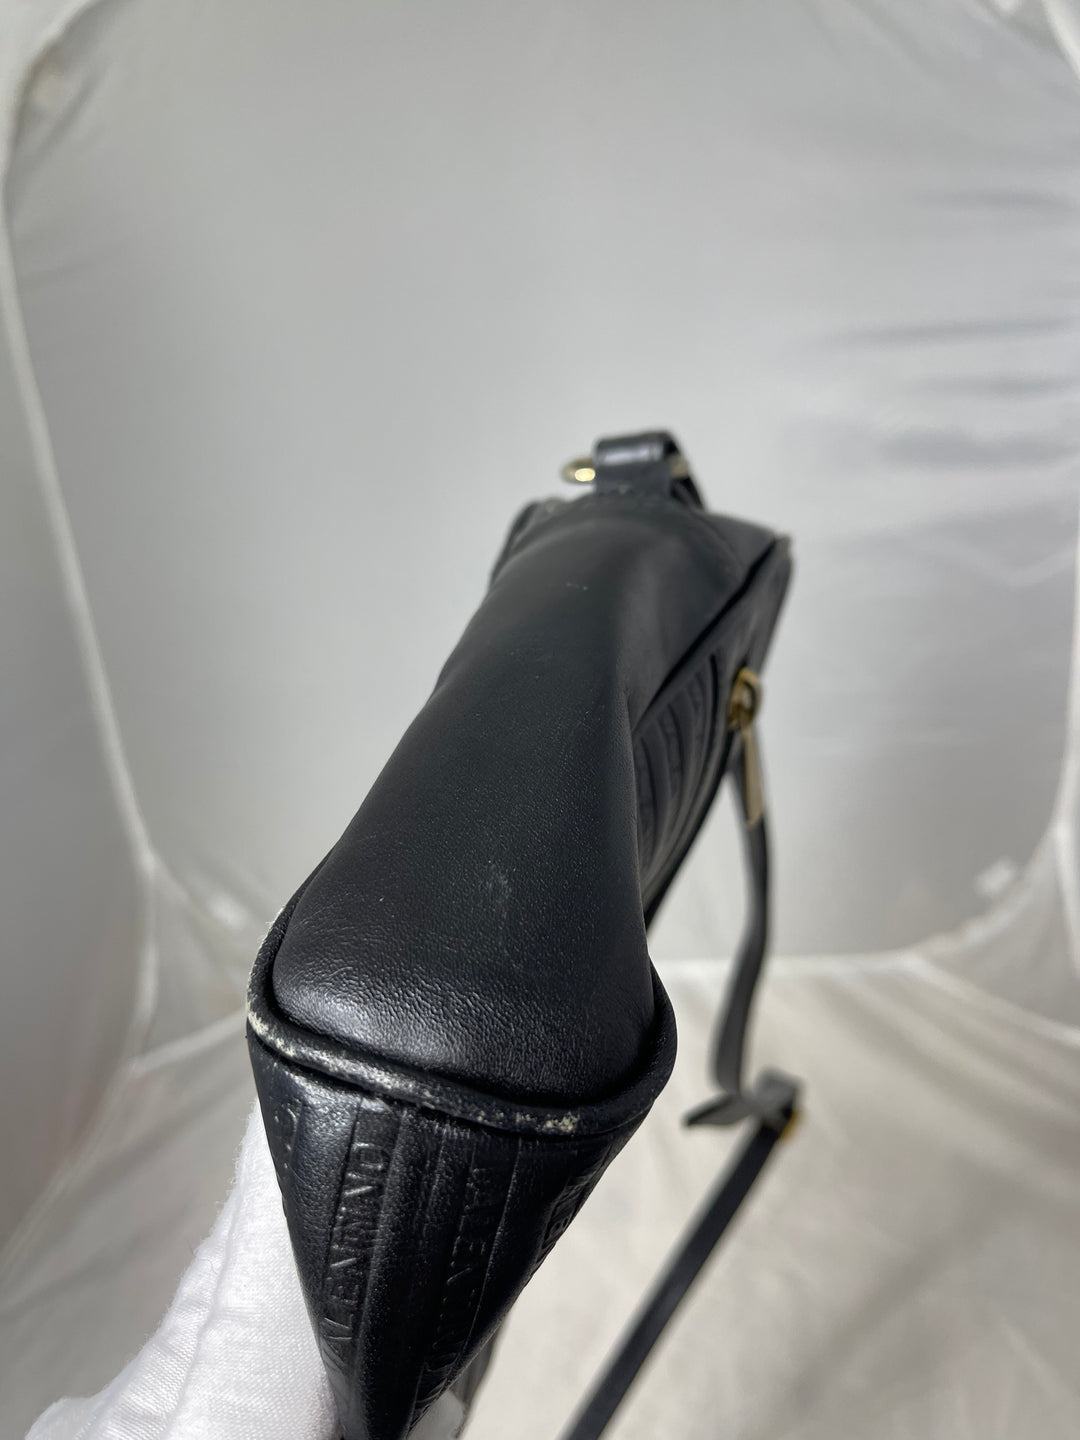 Valentino medium size black leather crossbody